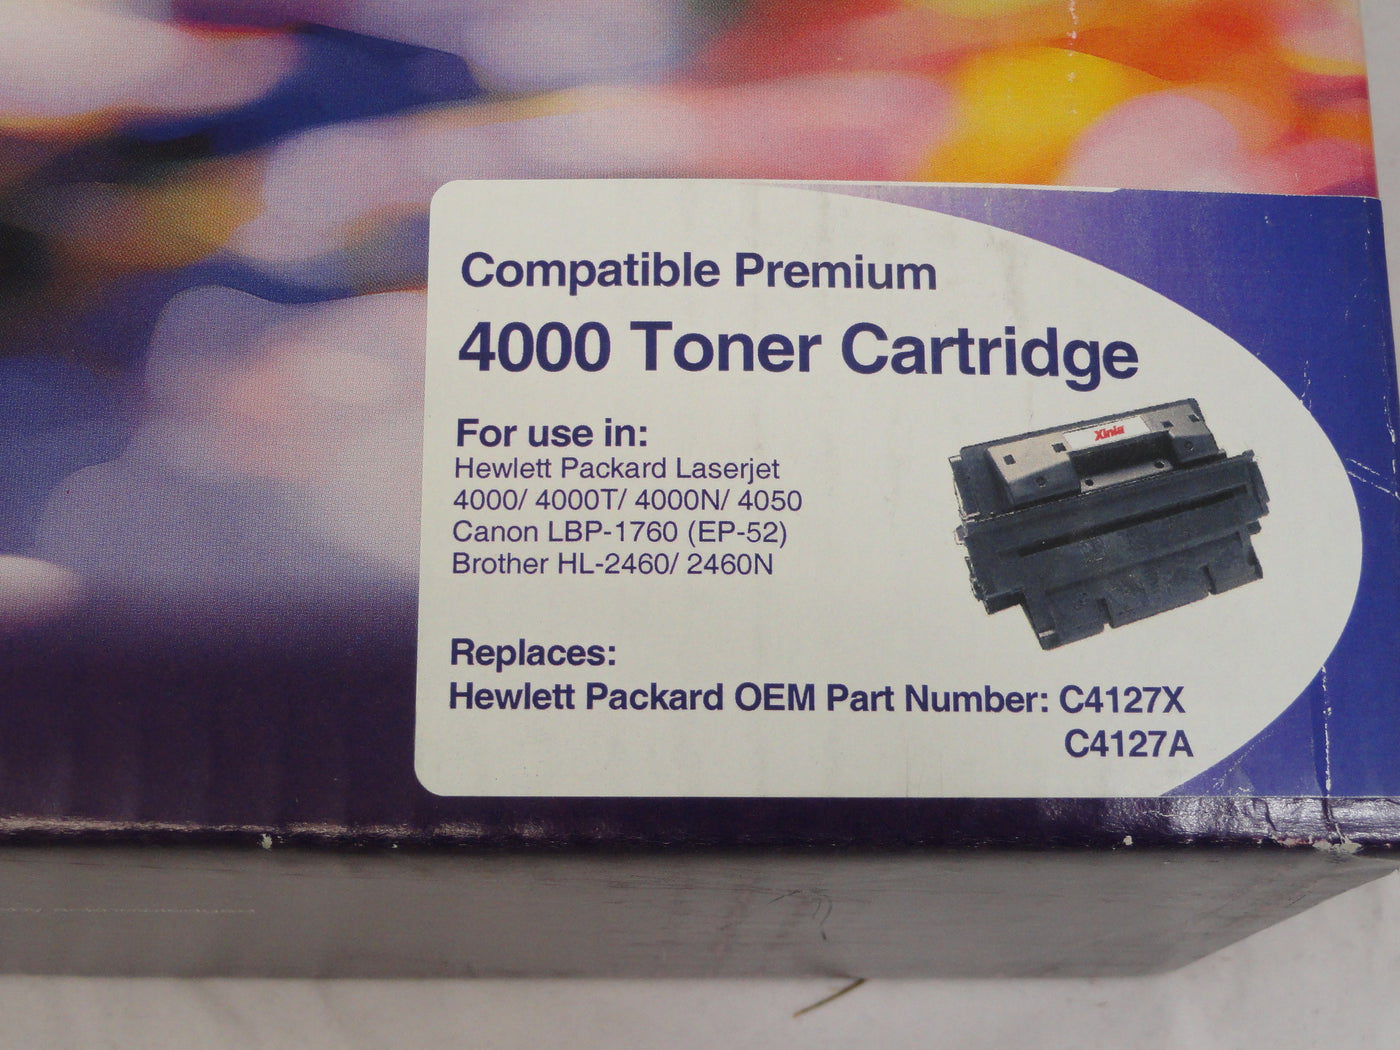 PR10539_400-004_Xinia Toner Cartridge - Image4